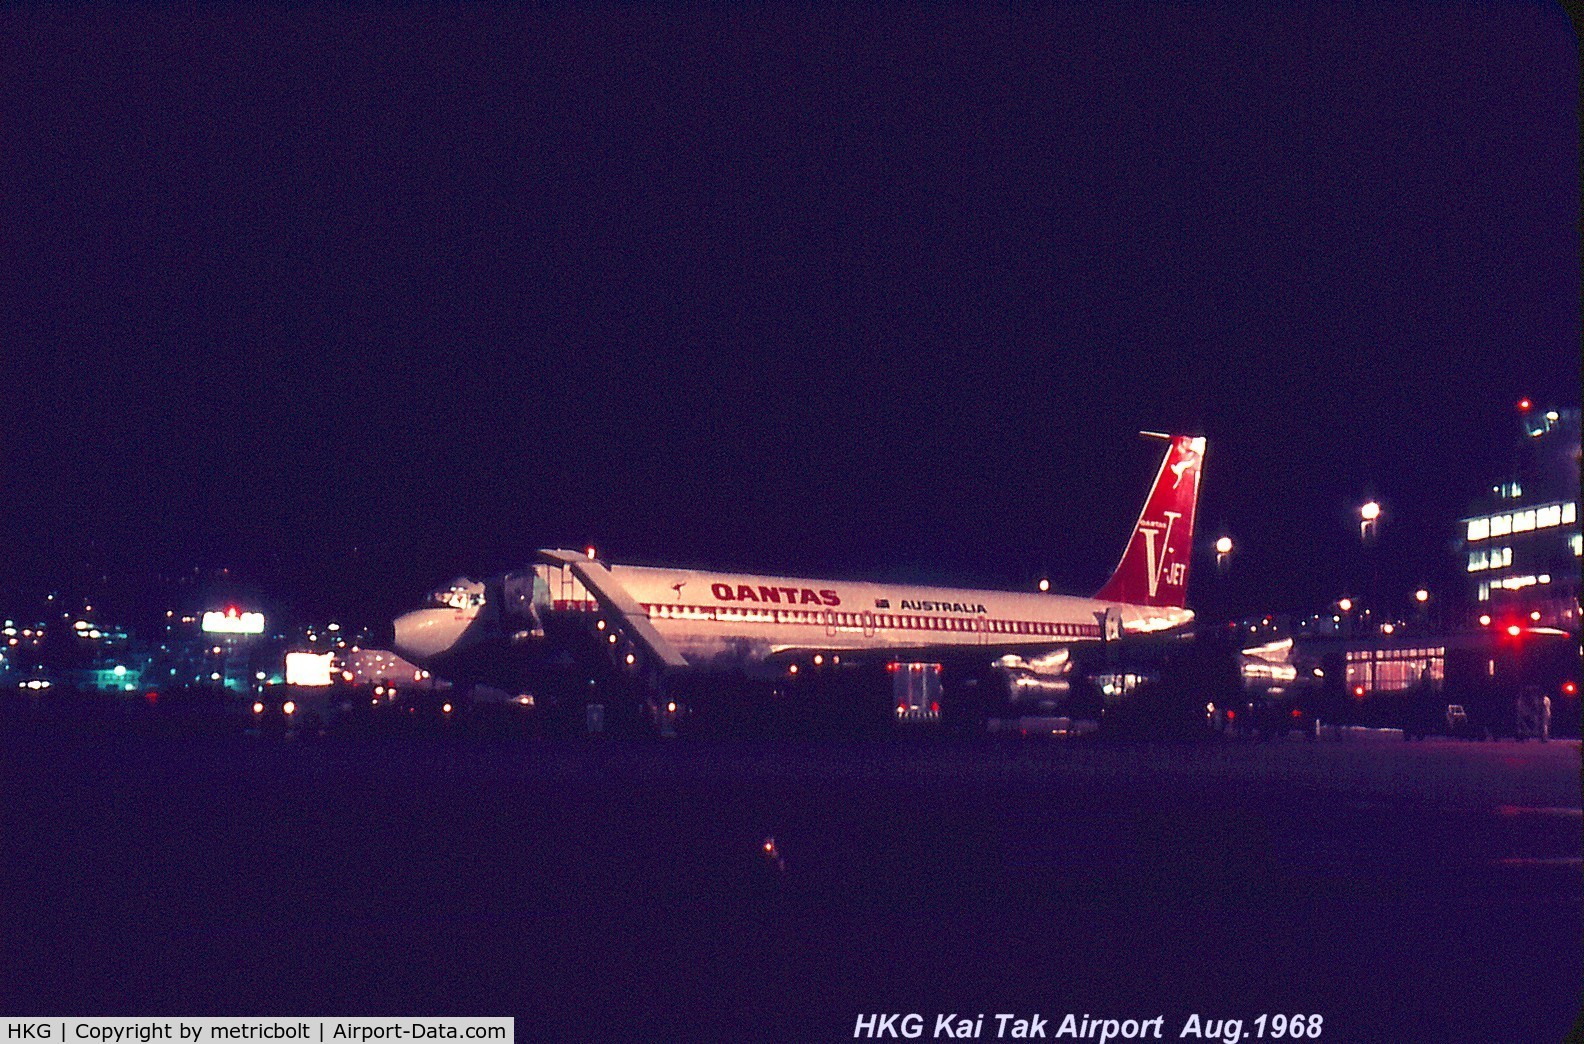 Hong Kong International Airport, Hong Kong Hong Kong (HKG) - Qantas B707 being fueled and catered in HKG Kai Tak in 1968 for late departure